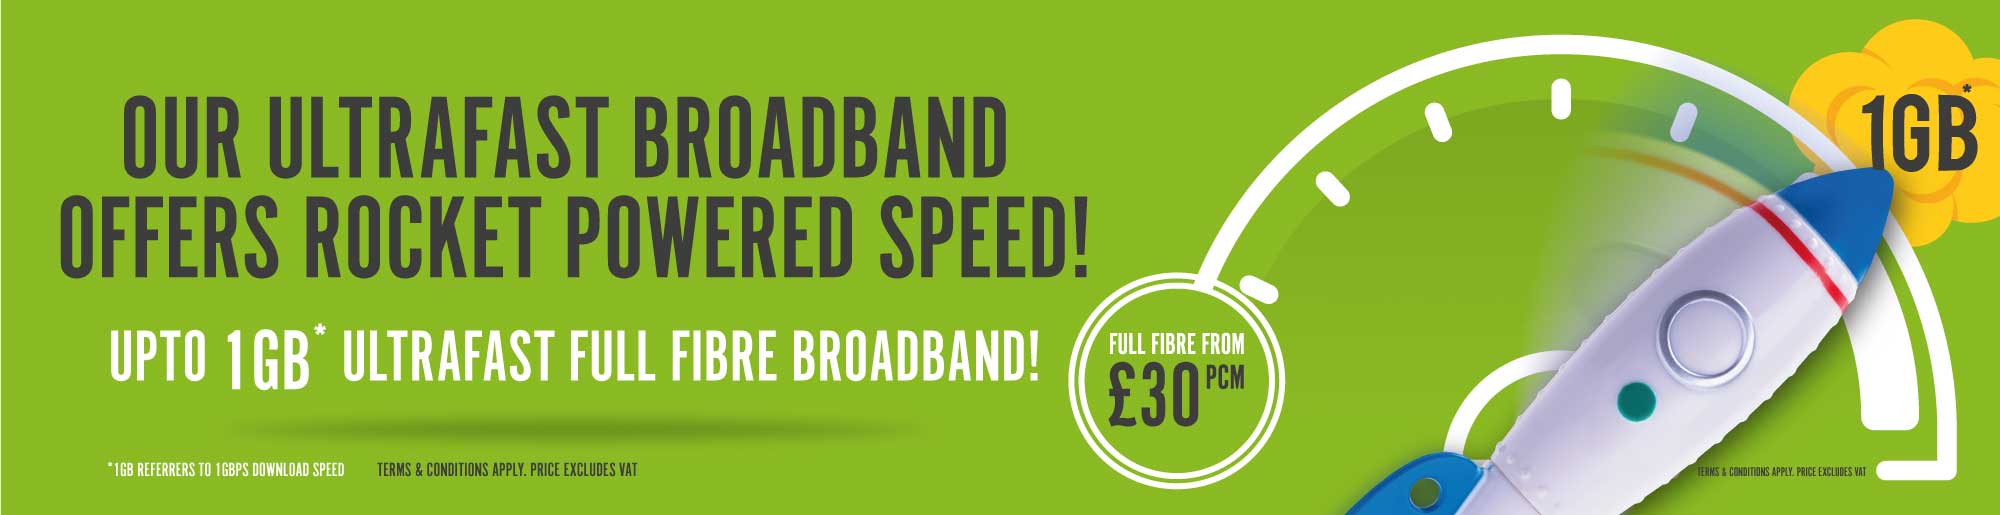 Full Fibre Broadband from £30 per month